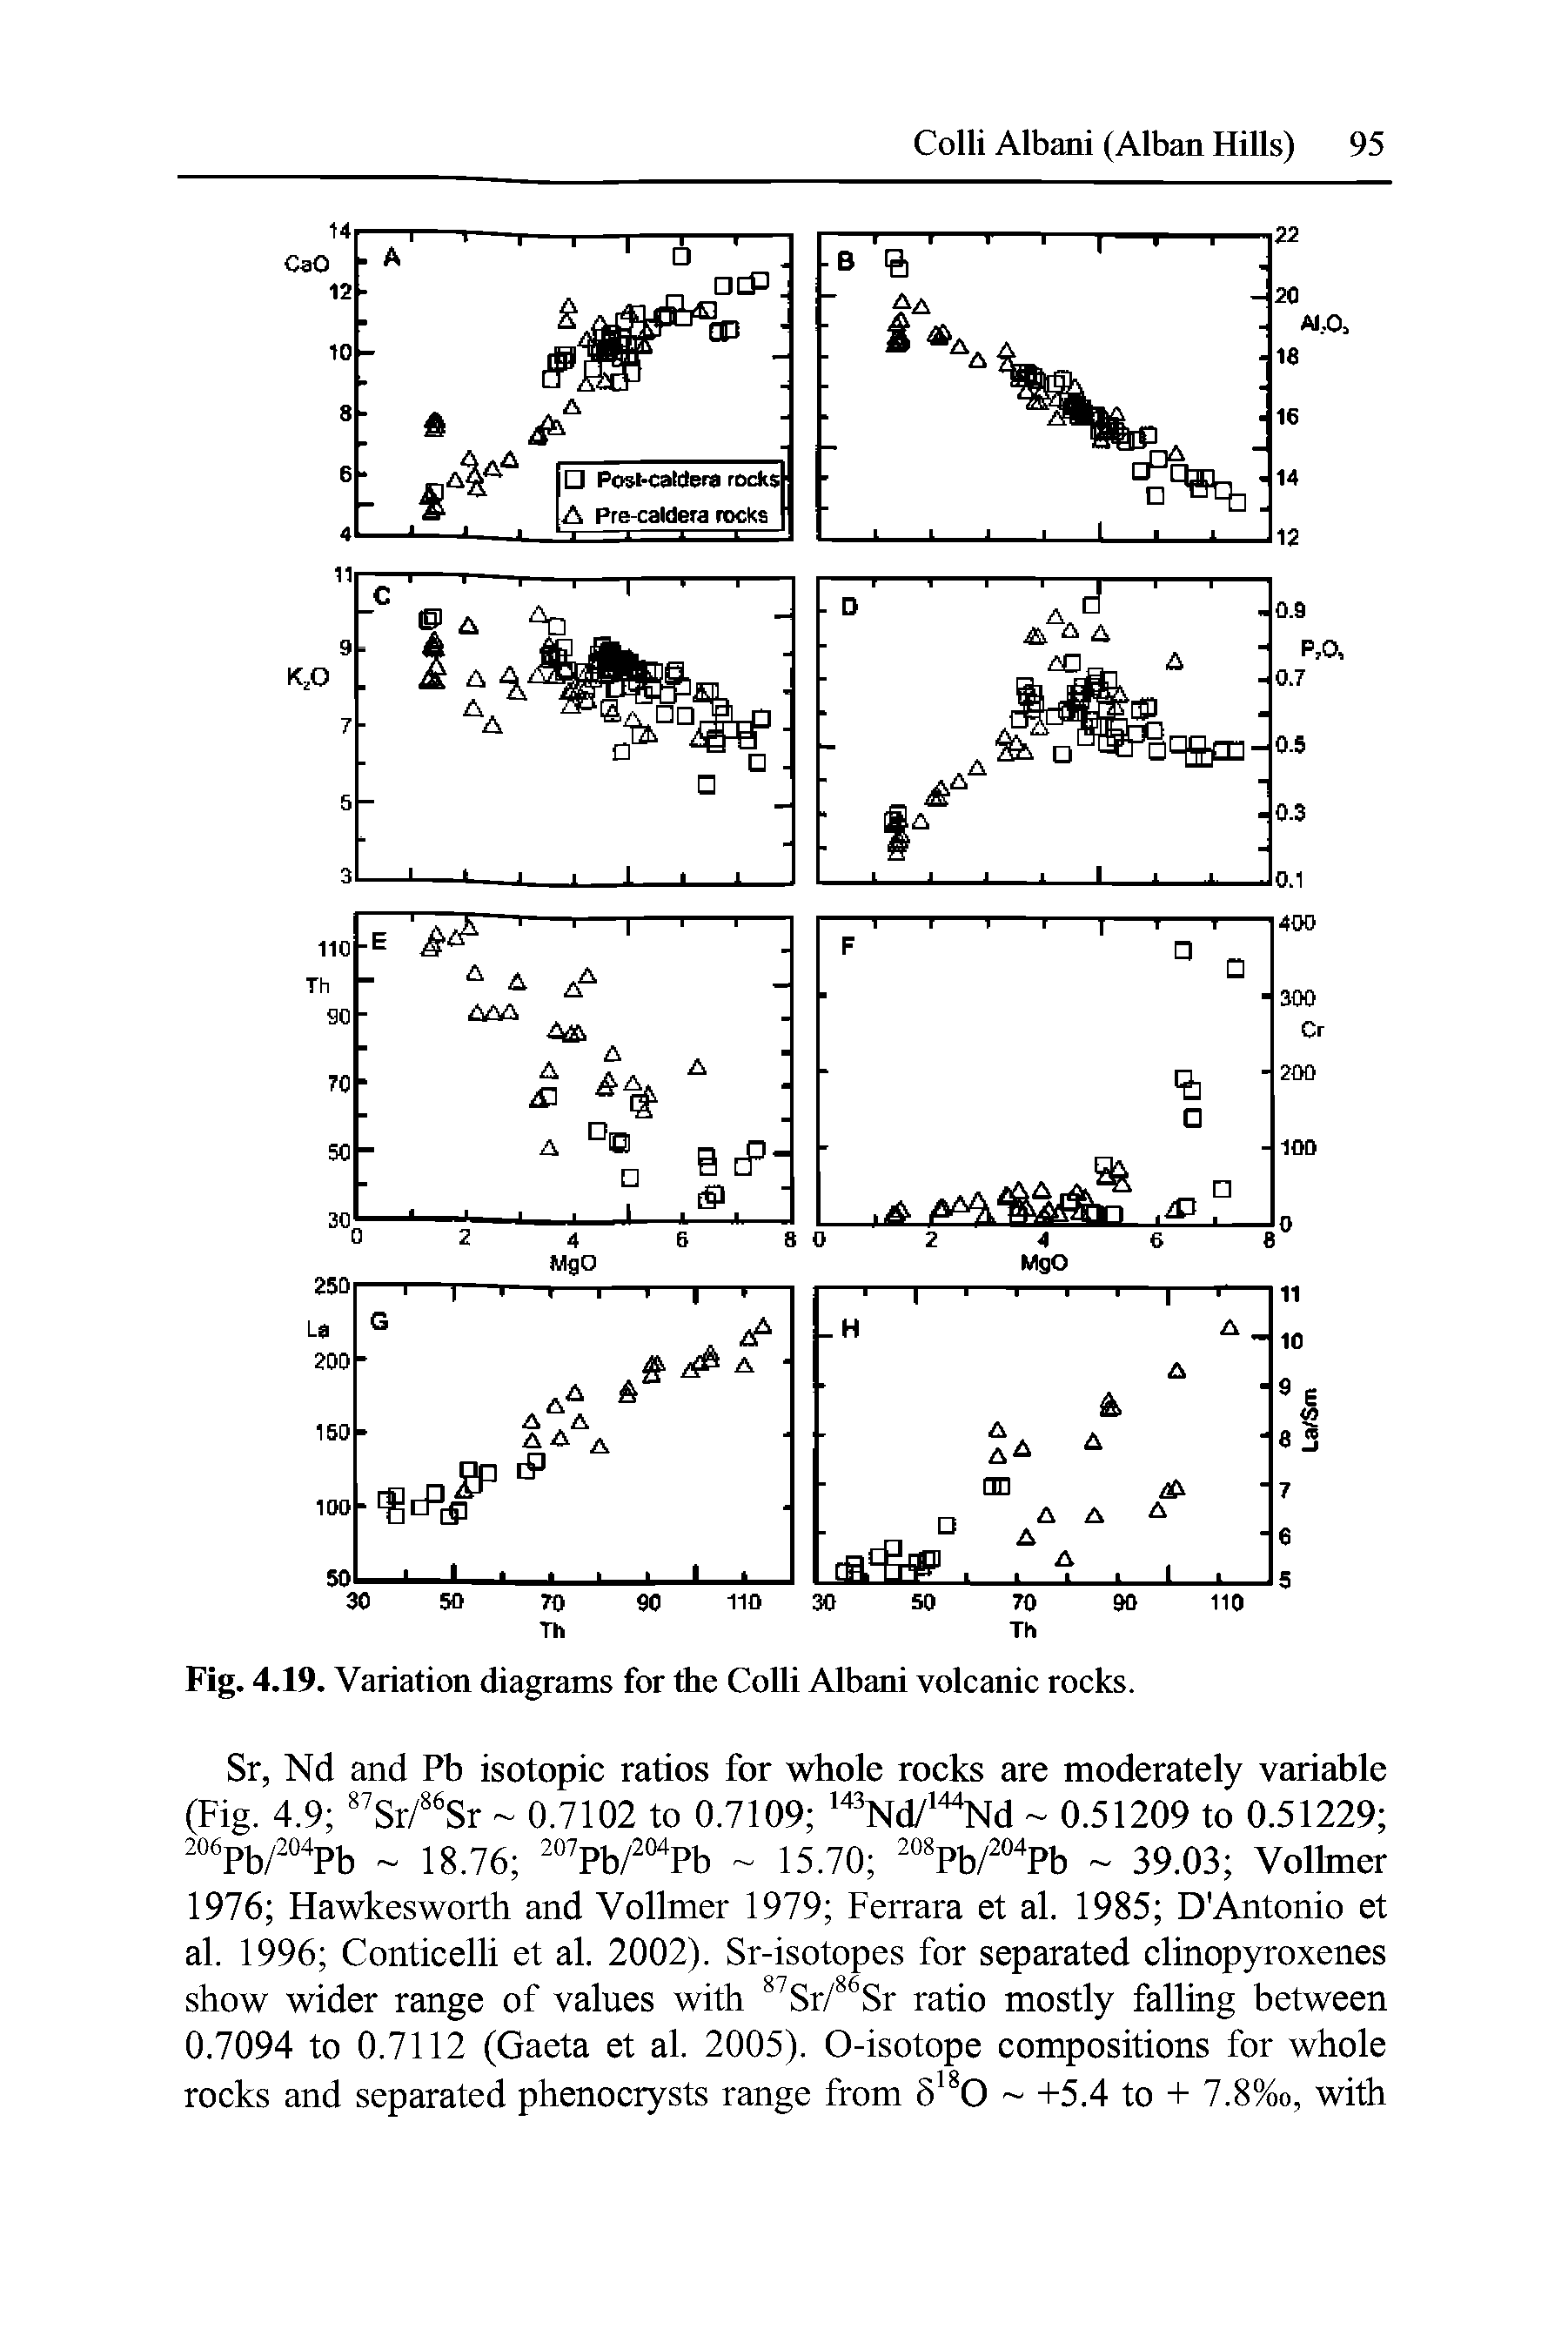 Fig. 4.19. Variation diagrams for the Colli Albani volcanic rocks.